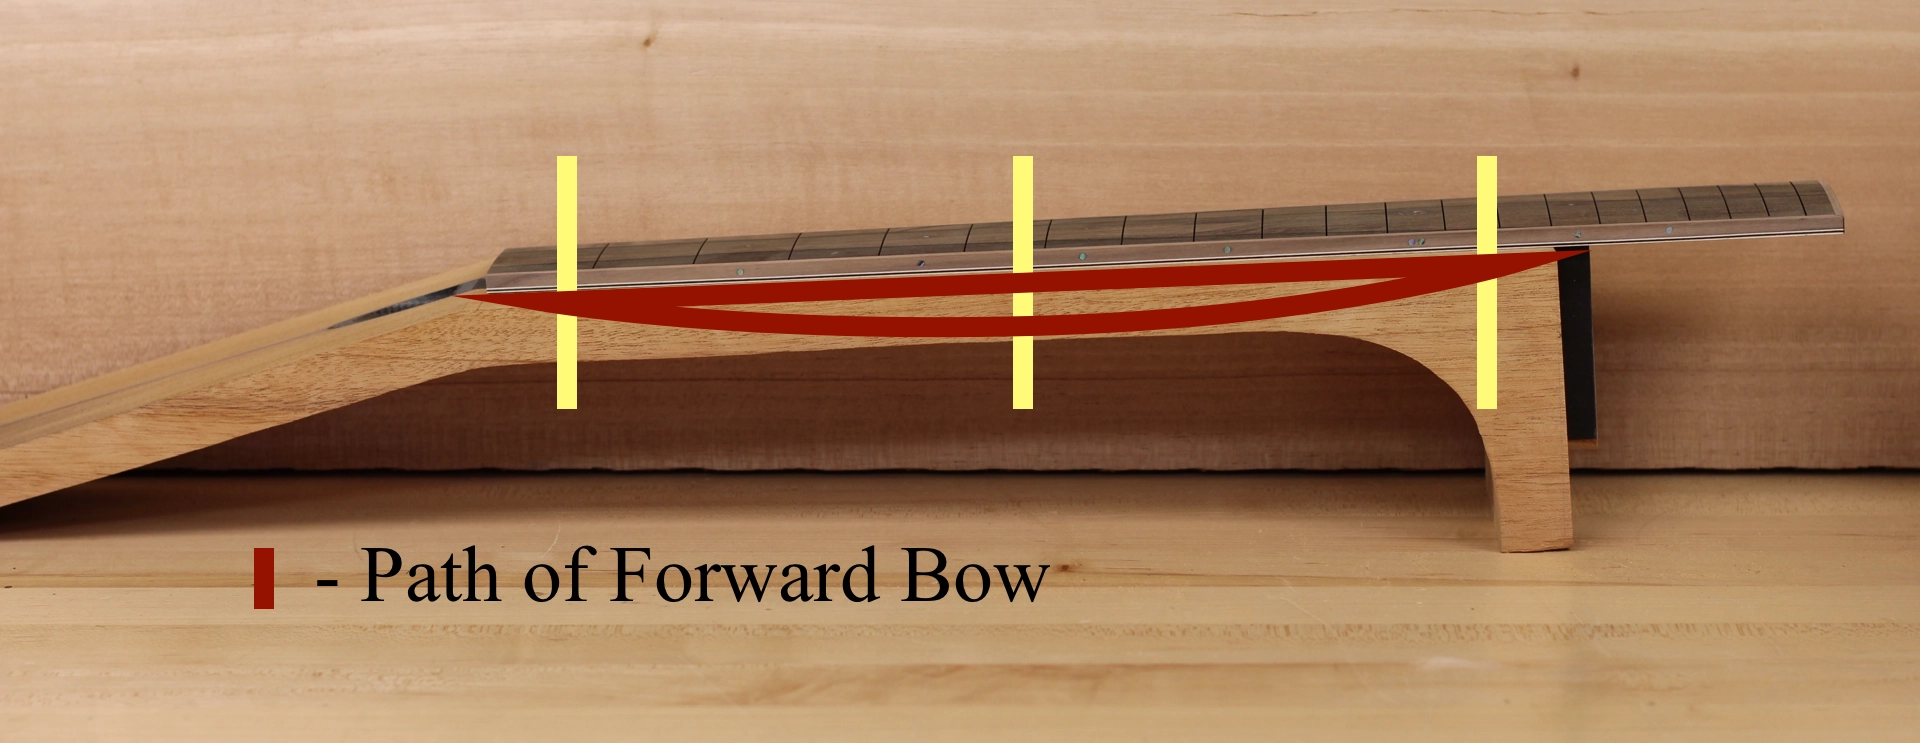 Forward Bow Path